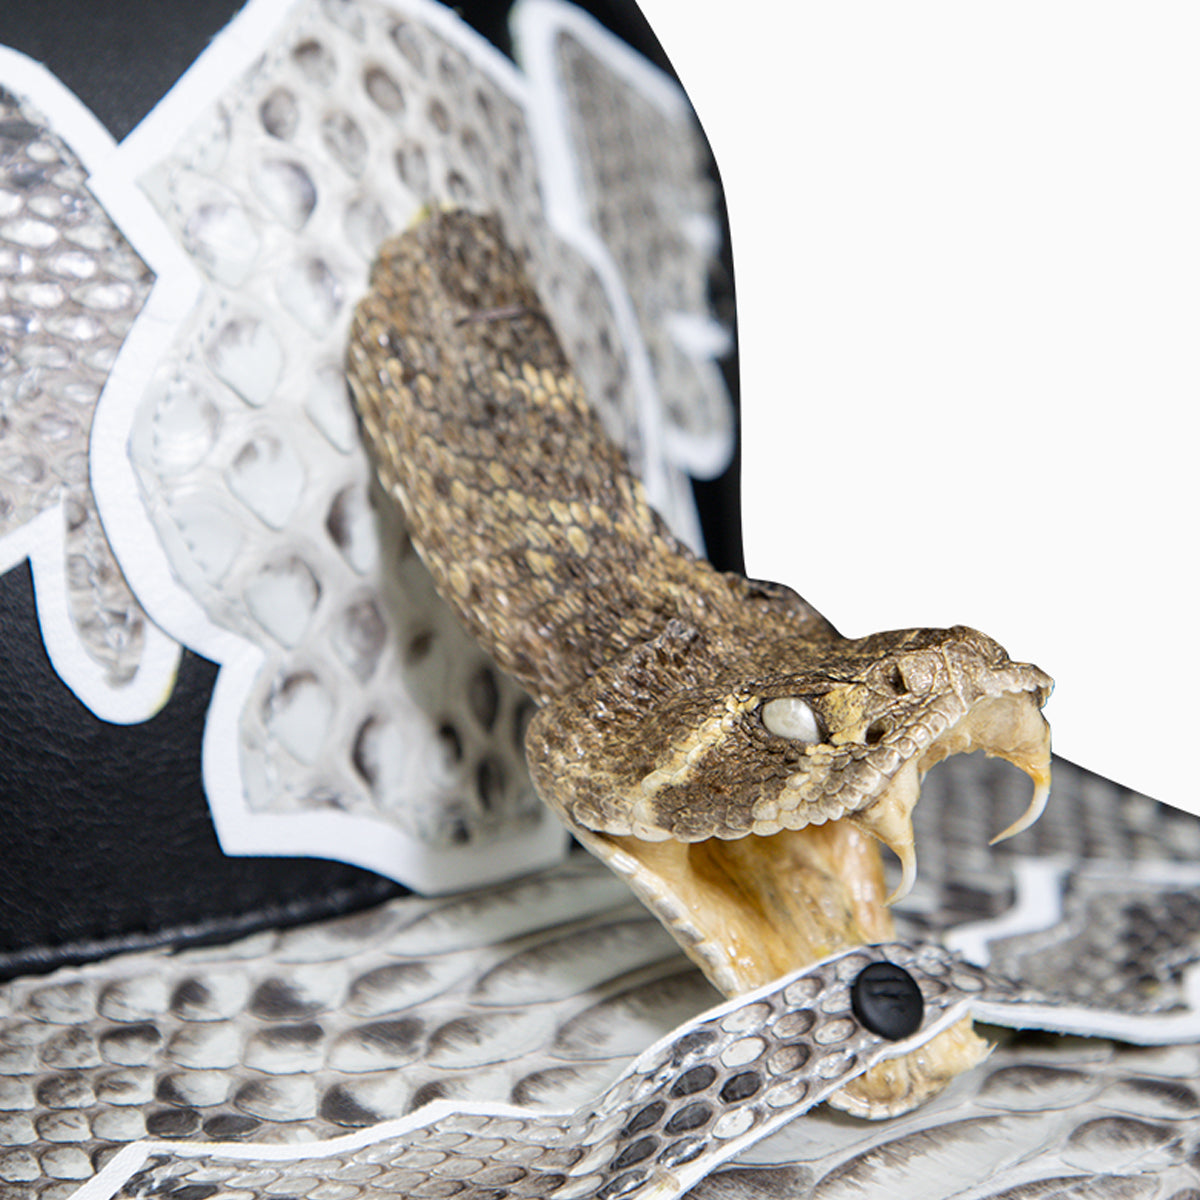 breyers-buck-50-leather-hat-with-faux-snake-skin-visor-breyers-slh-black-gy